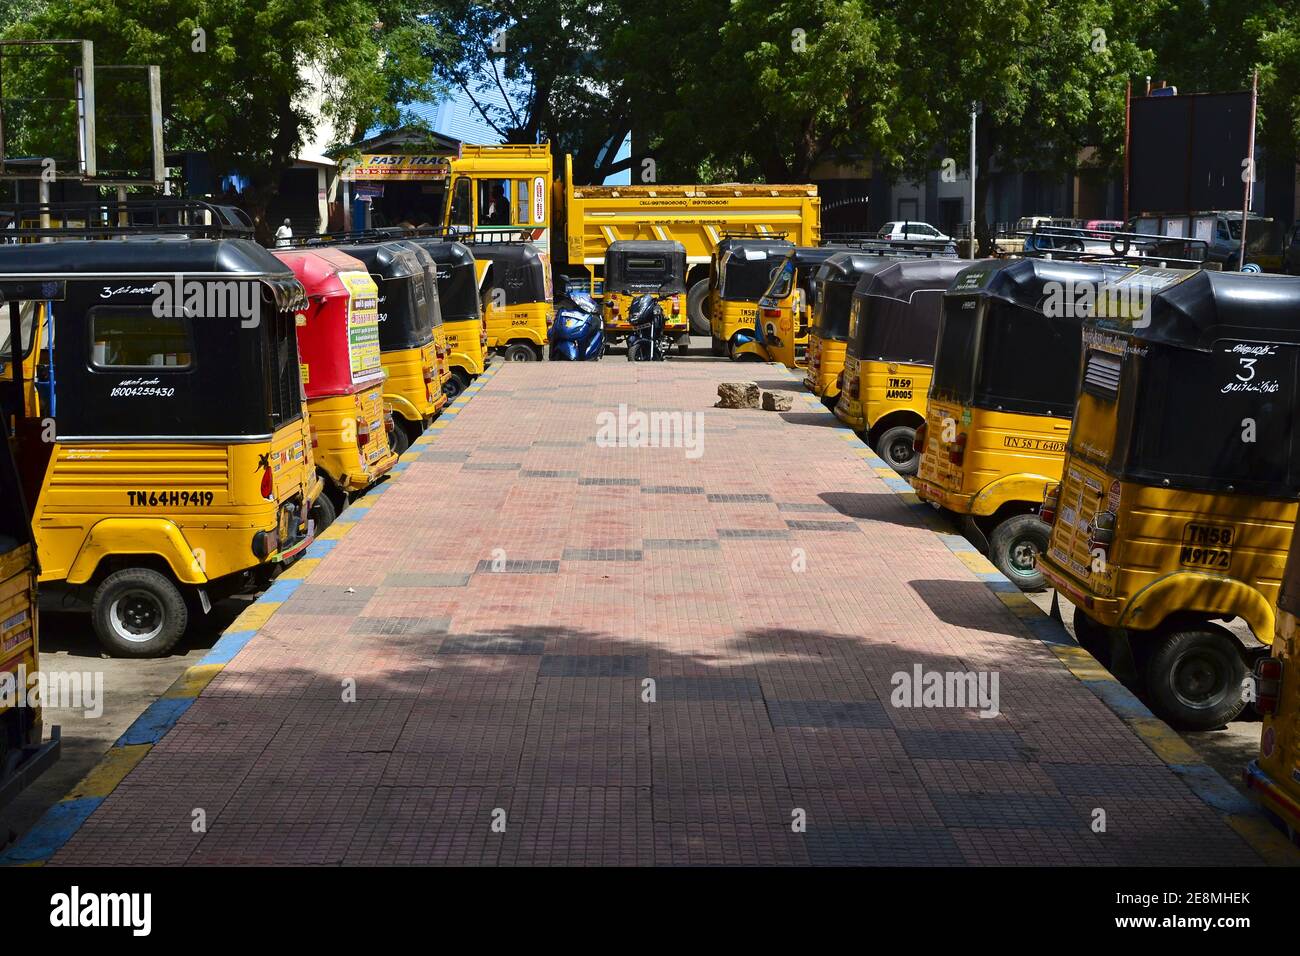 Madurai, Tamil Nadu, India - January, 2017: Auto rickshaws parked on parking lot in front of Madurai Junction railway station. Yellow tuk-tuk taxi par Stock Photo